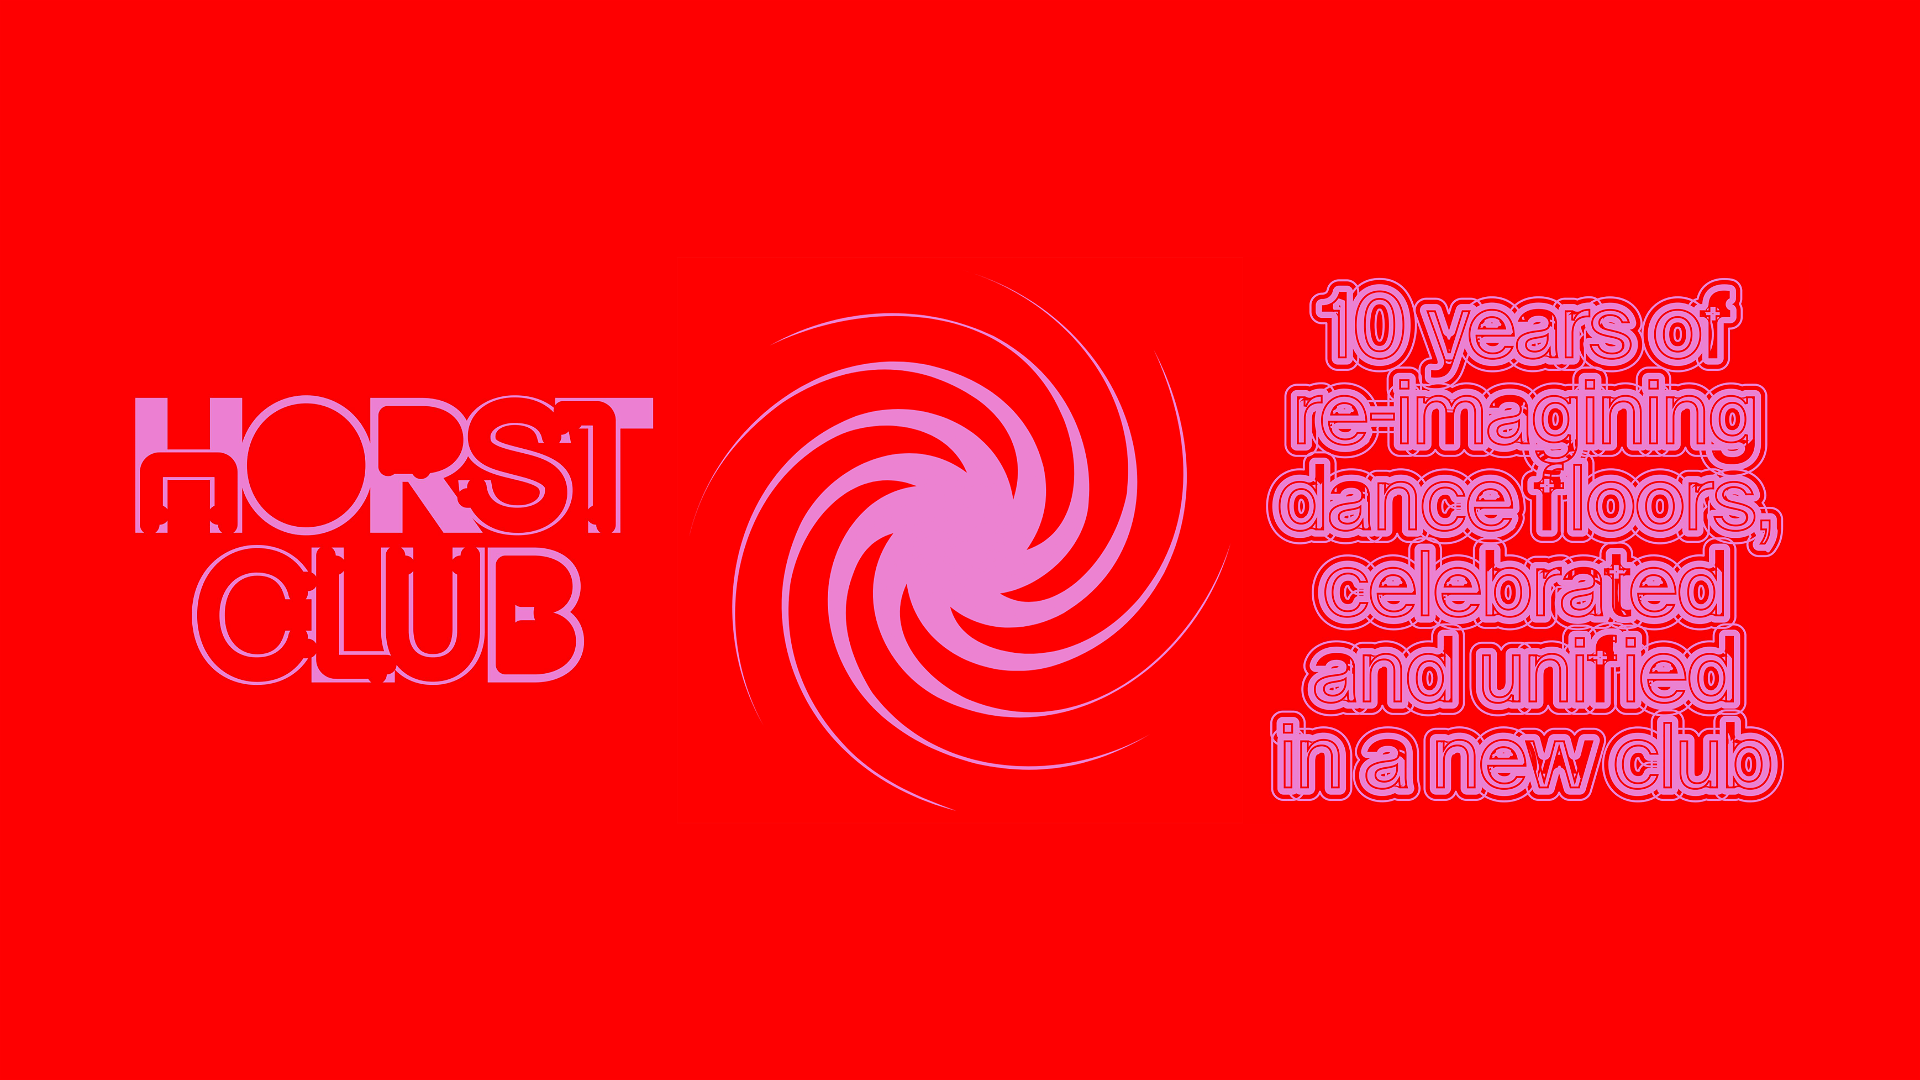 Horst Club